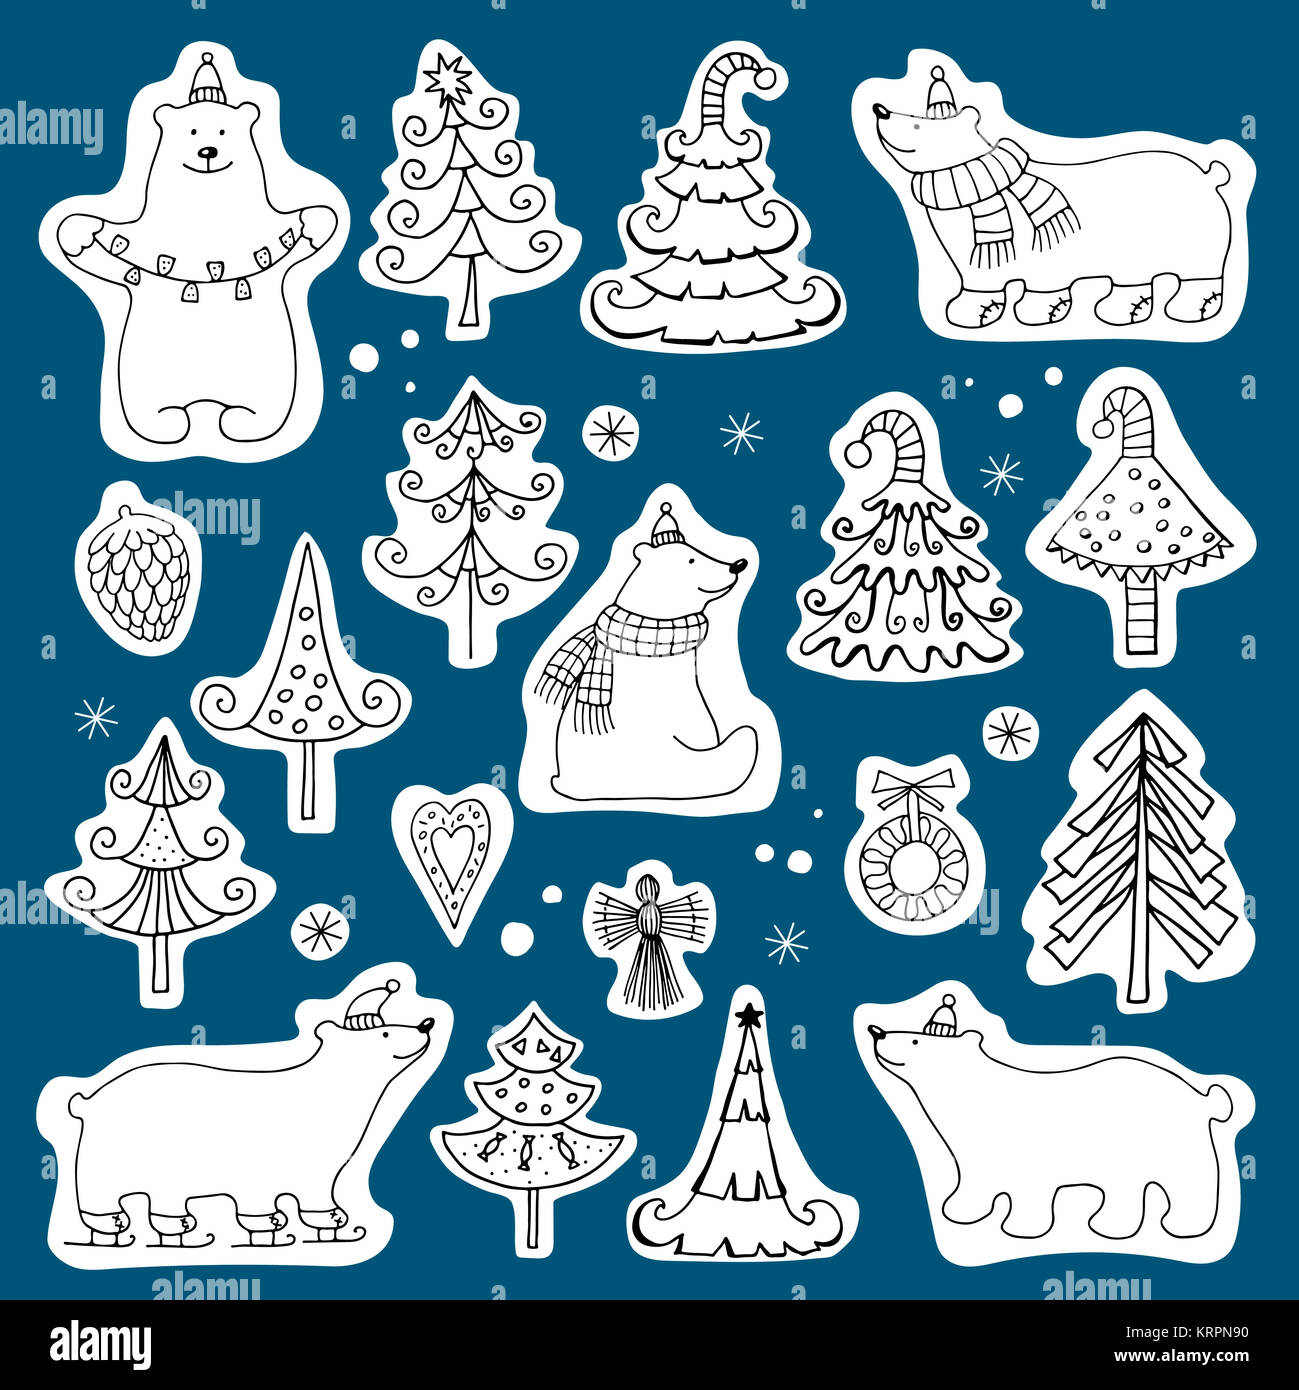 set of icons of polar bears and Christmas trees Stock Photo